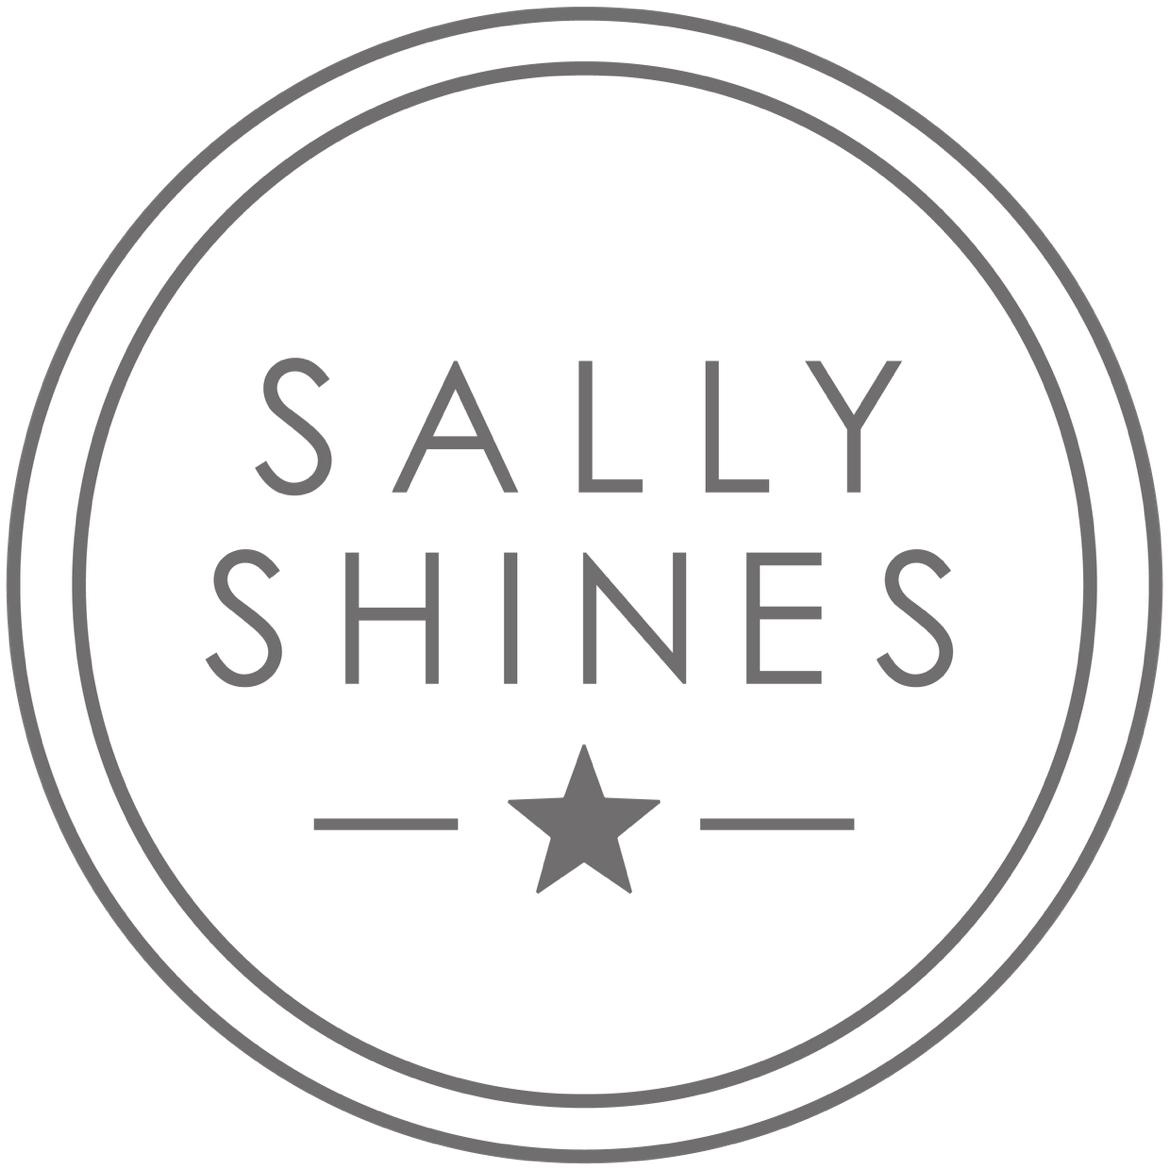 Sallyshines's images